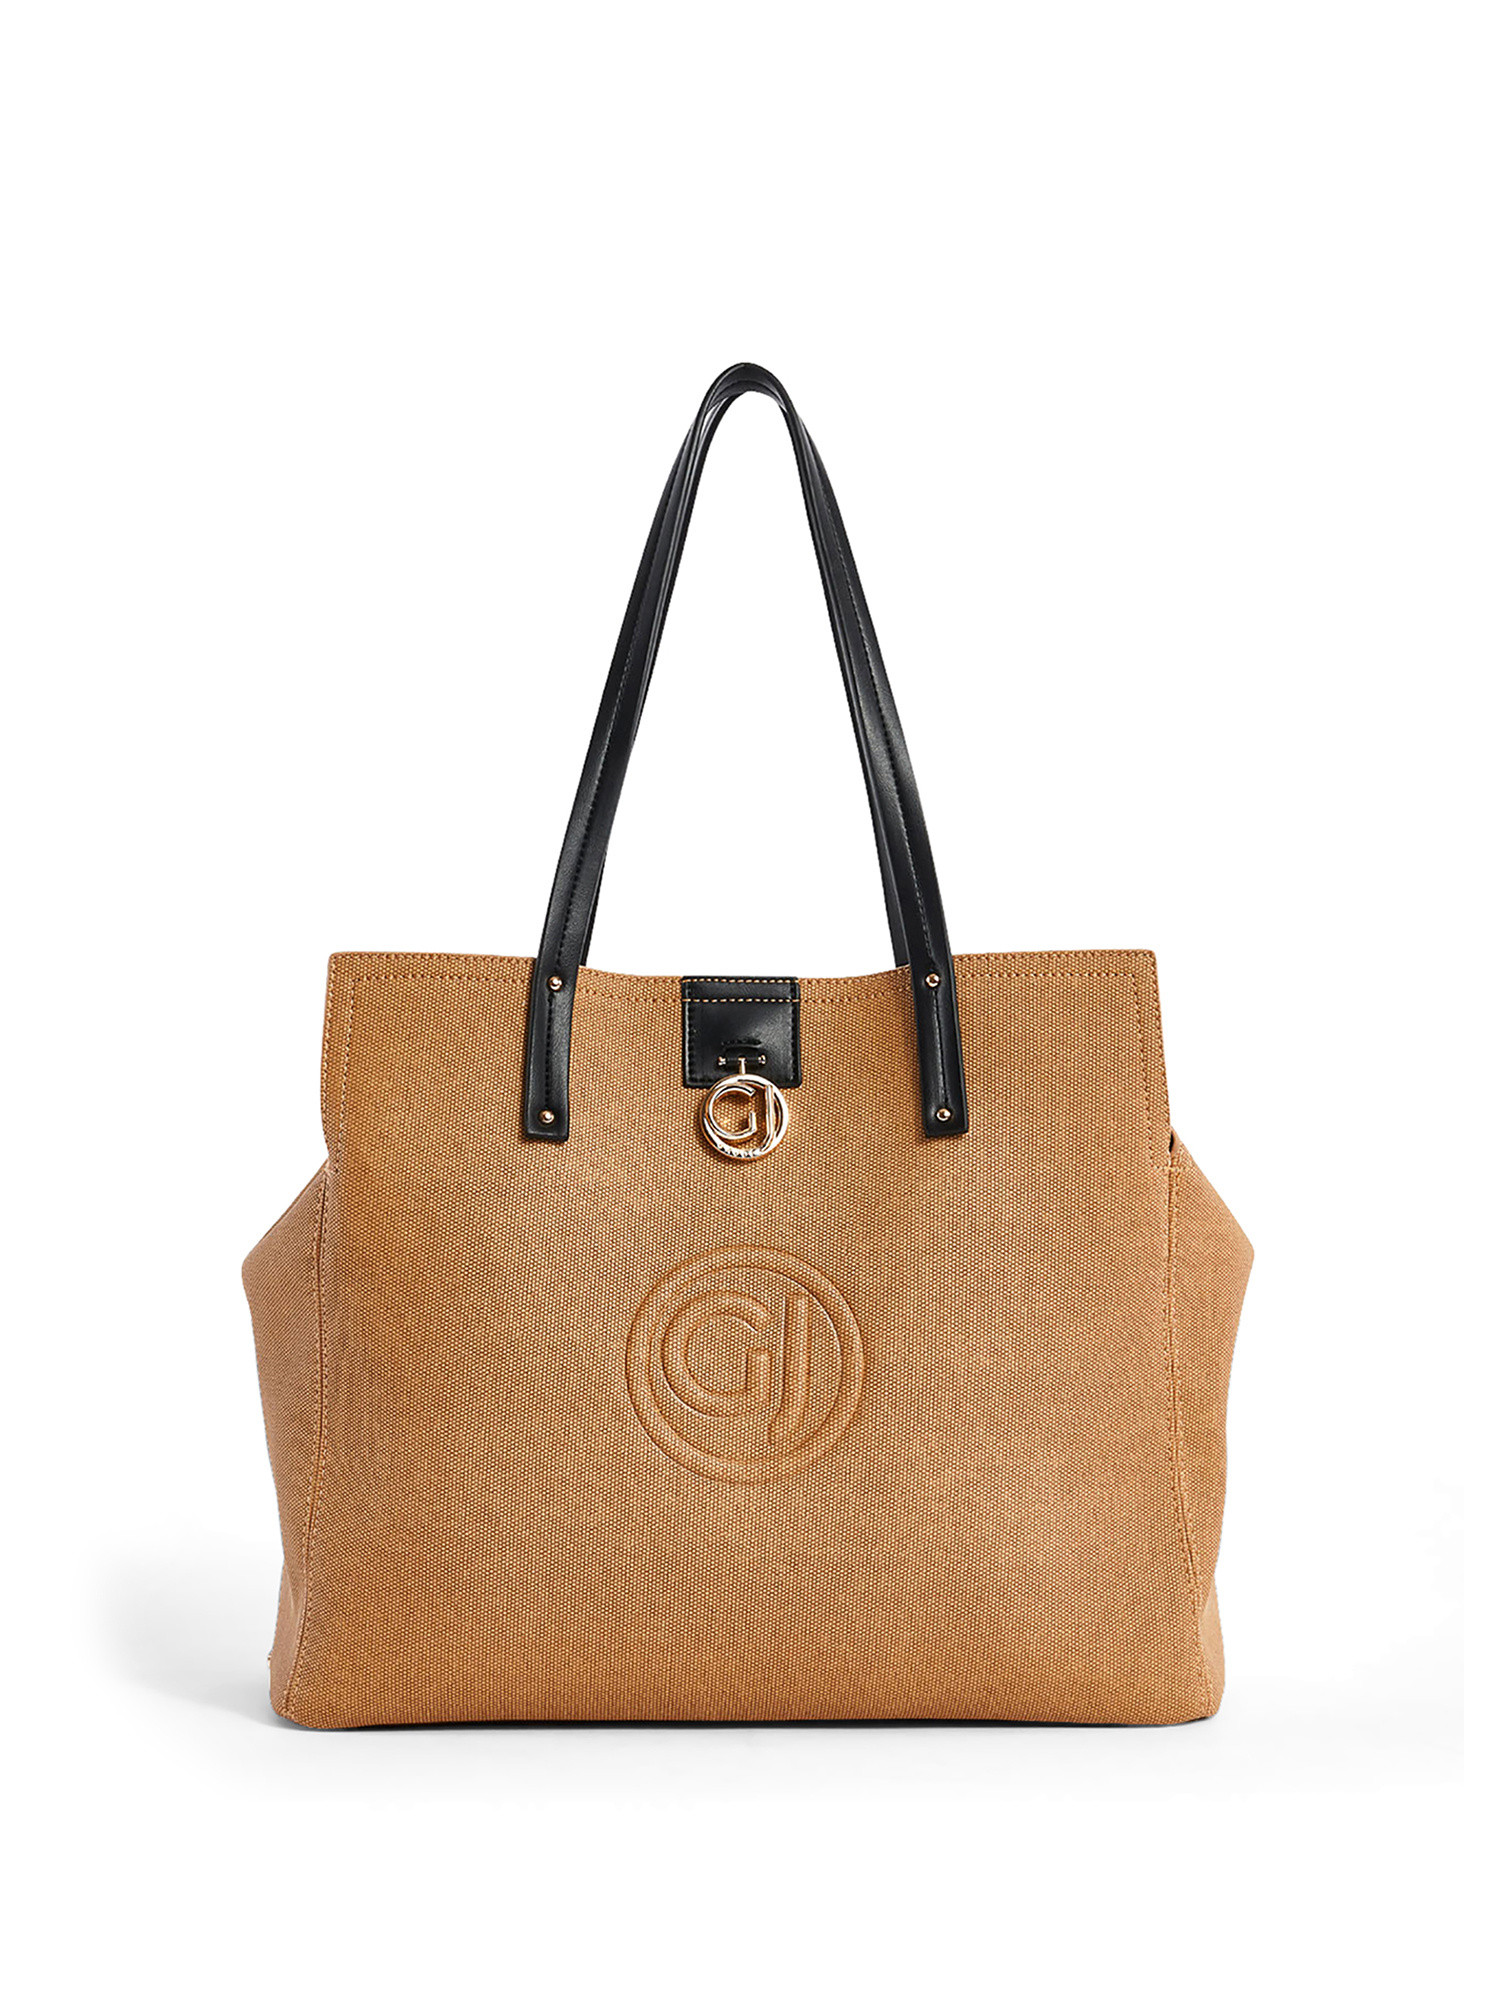 Gaudì - Shopping bag, Camel, large image number 0